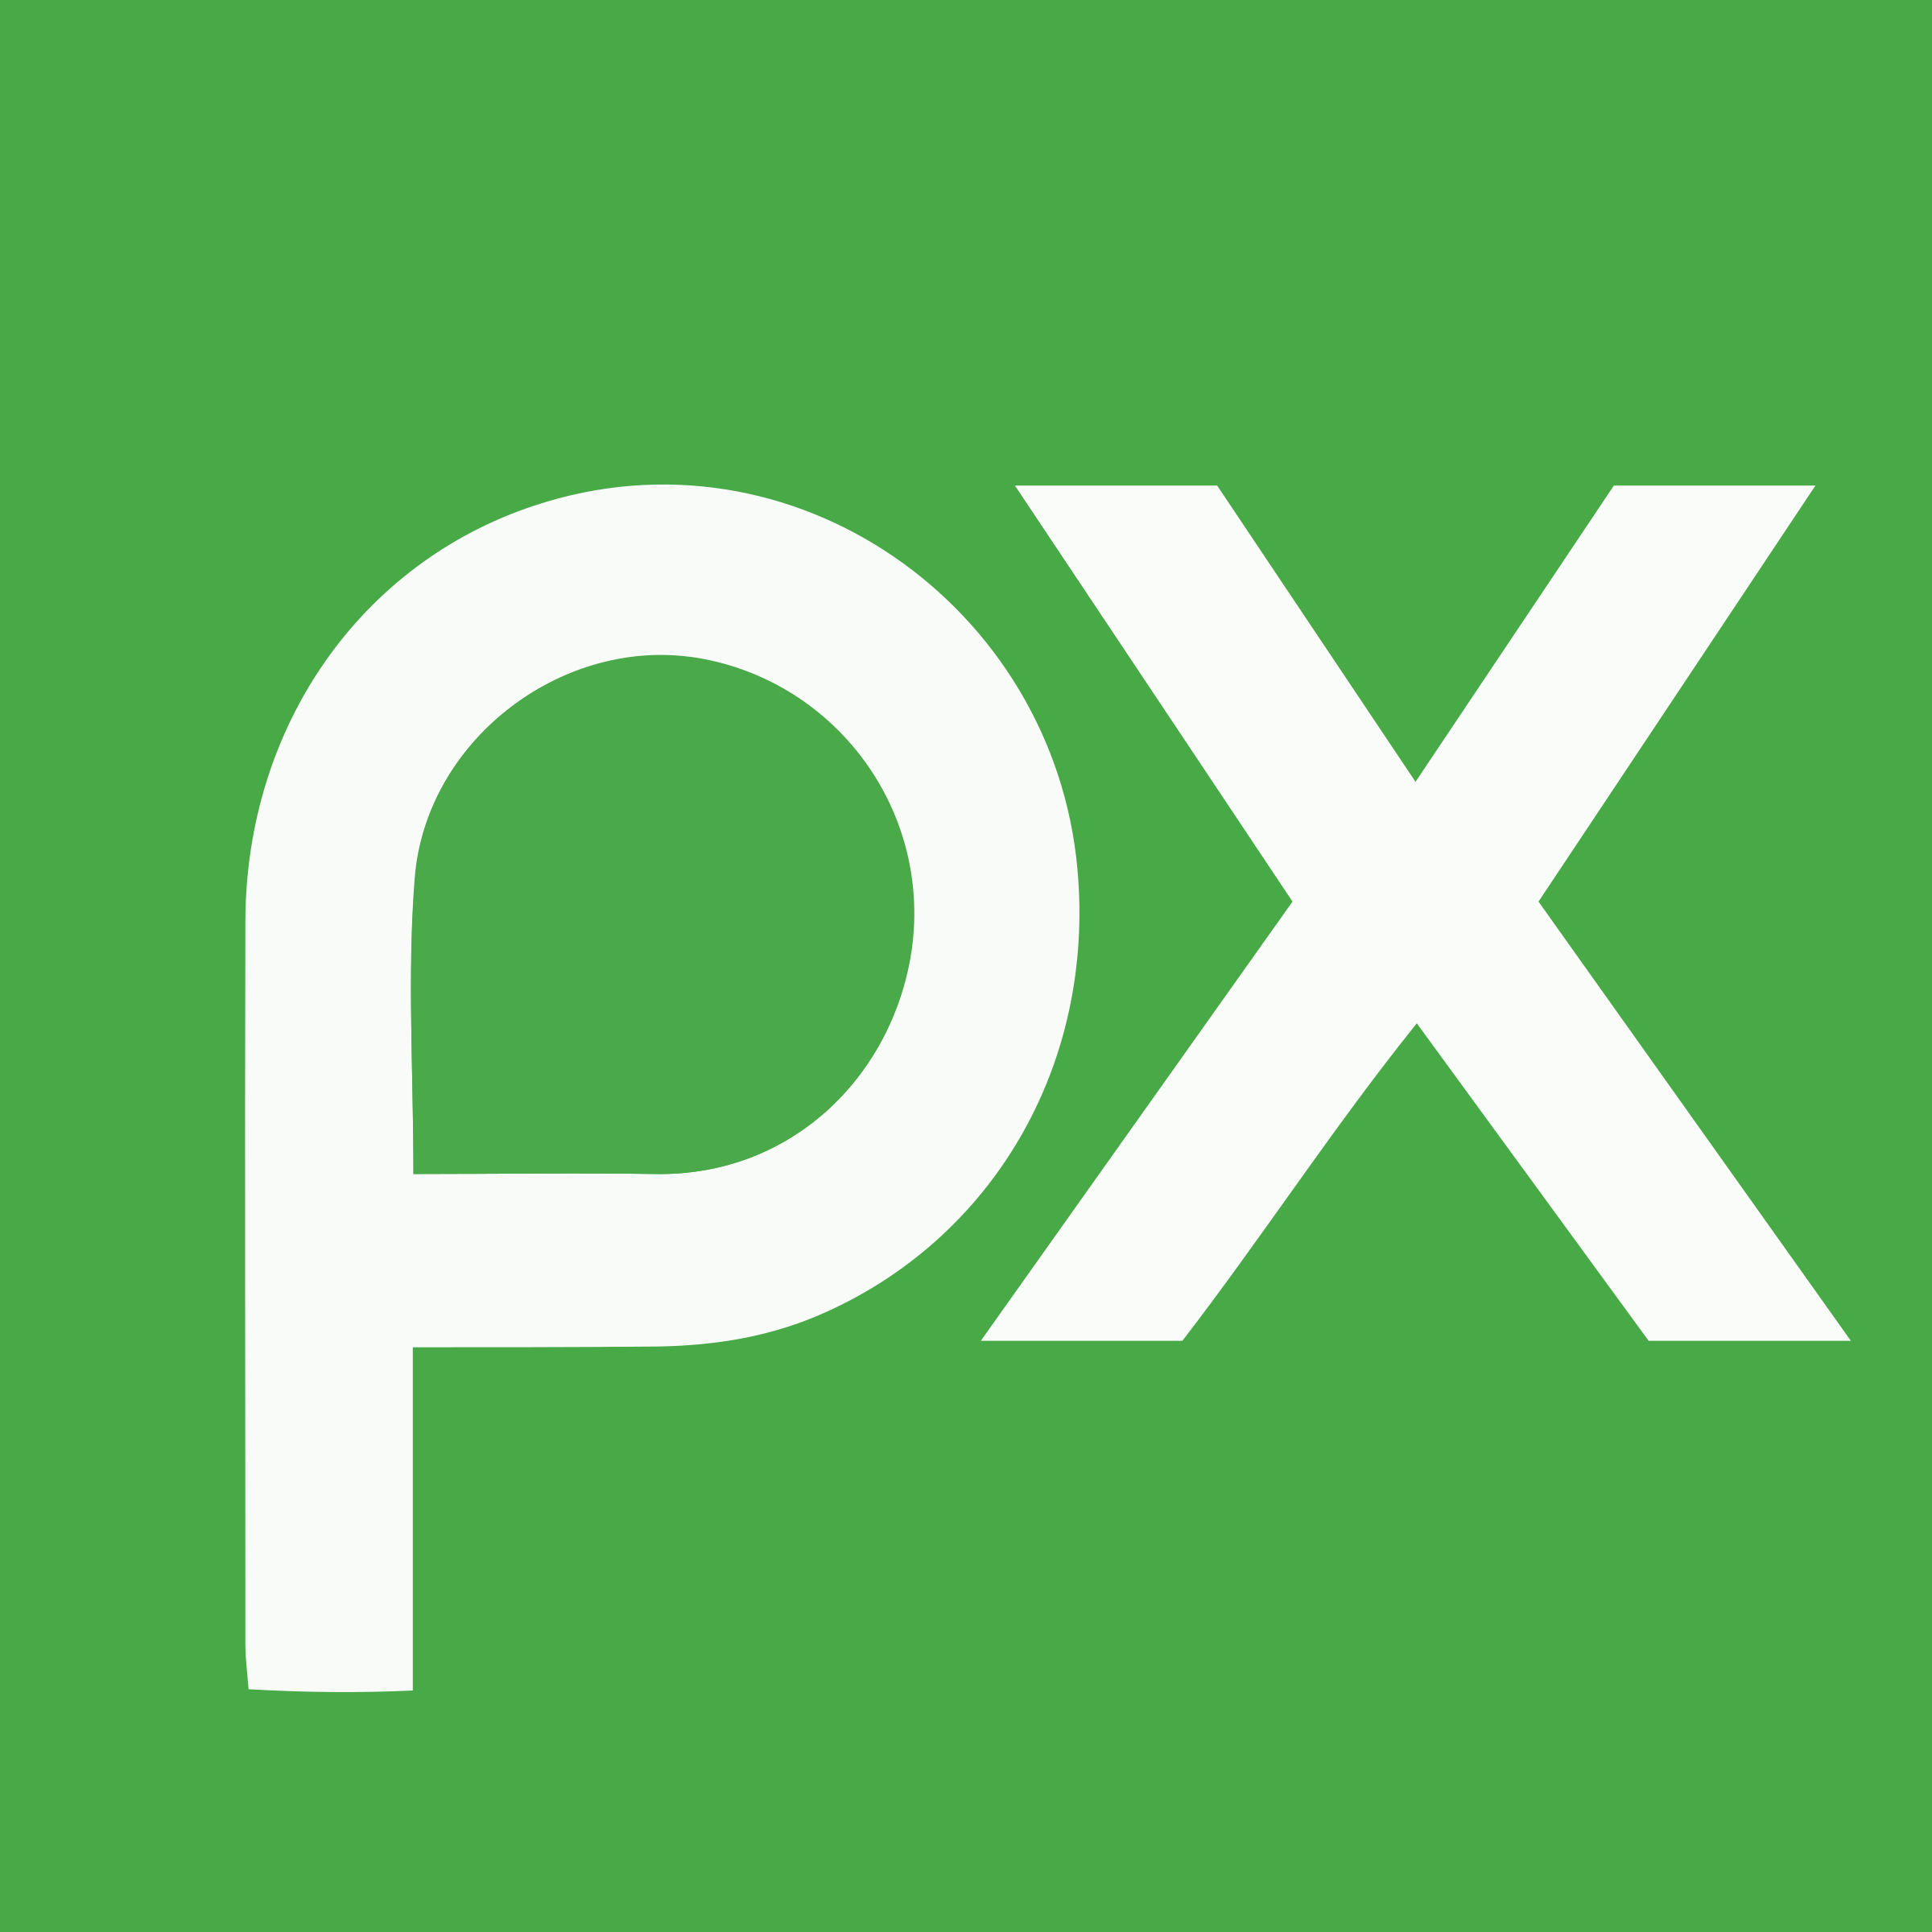 Pixabay 's Logo